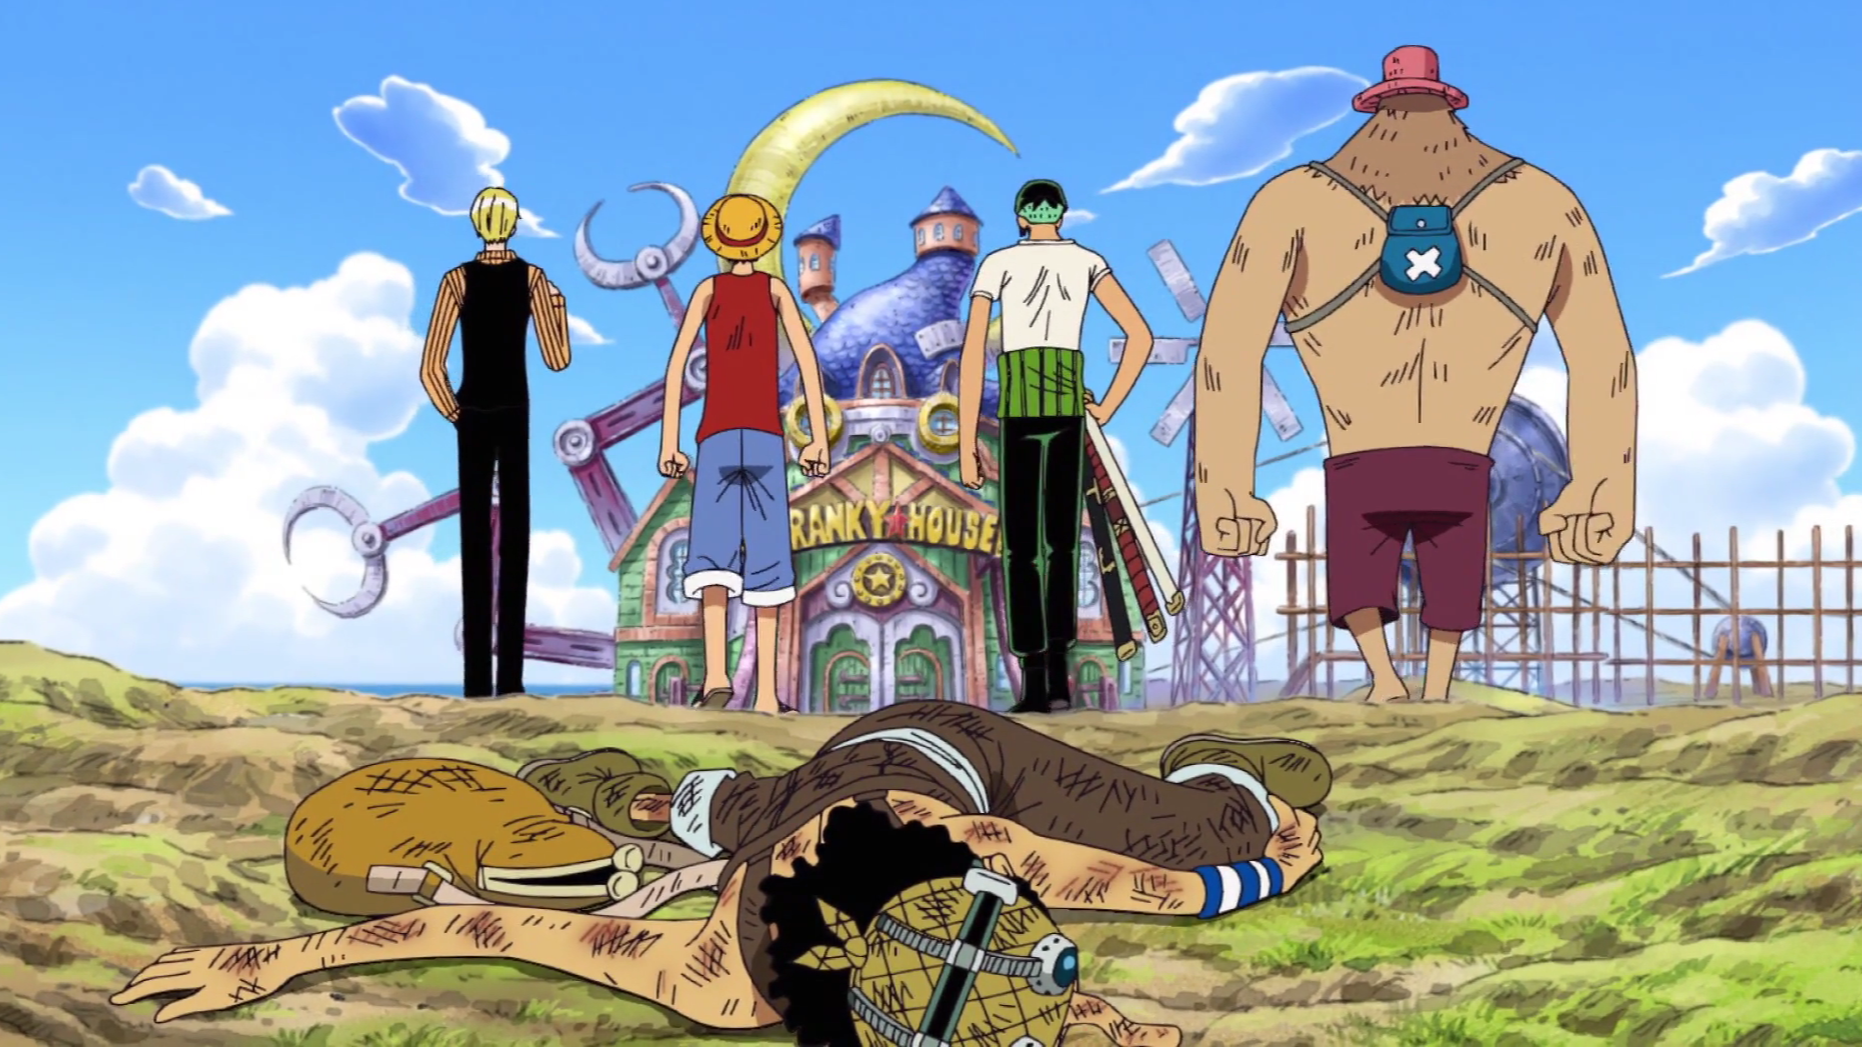 One Piece Water 7 Sanji Luffy Zoro Chopper Attack Franky's House